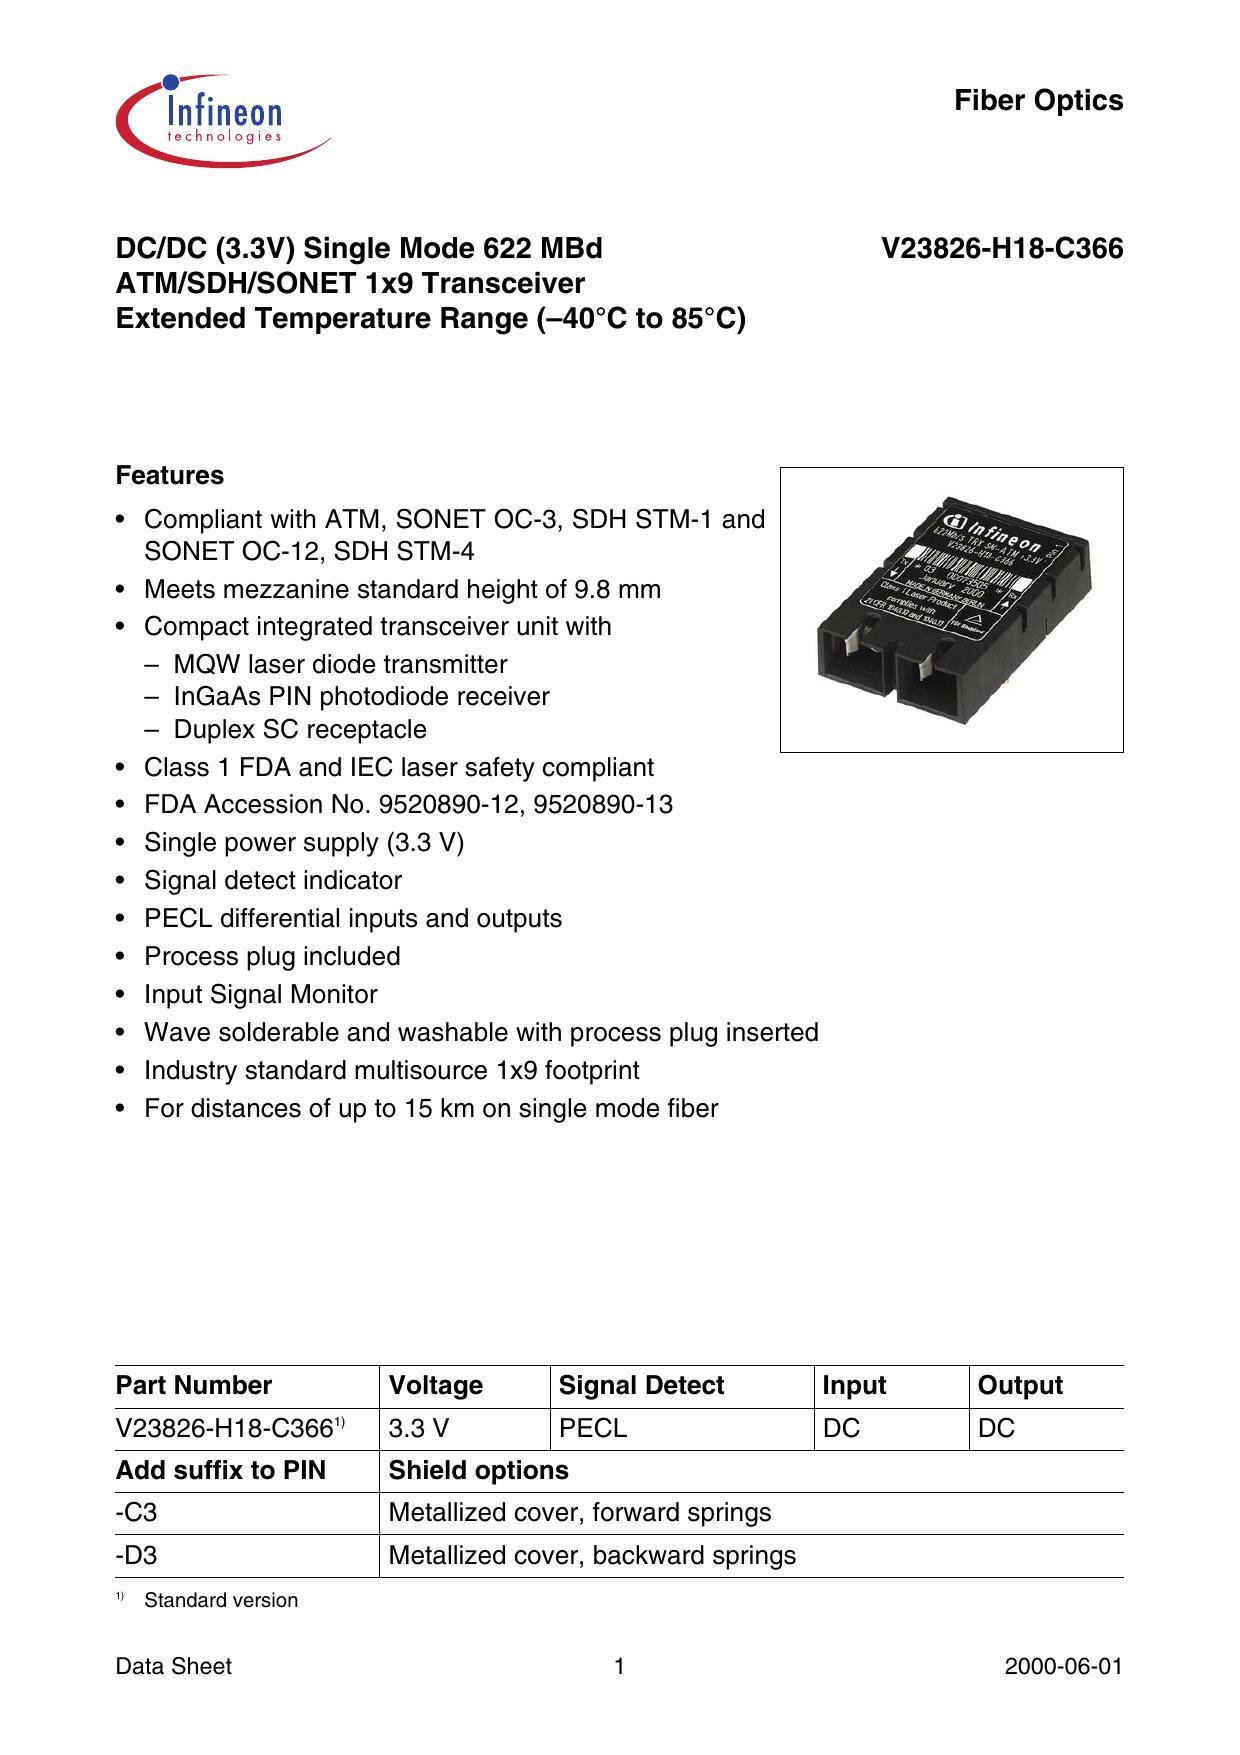 infineon-v23826-h18-c366-622-mbd-fiber-optic-transceiver-datasheet.pdf